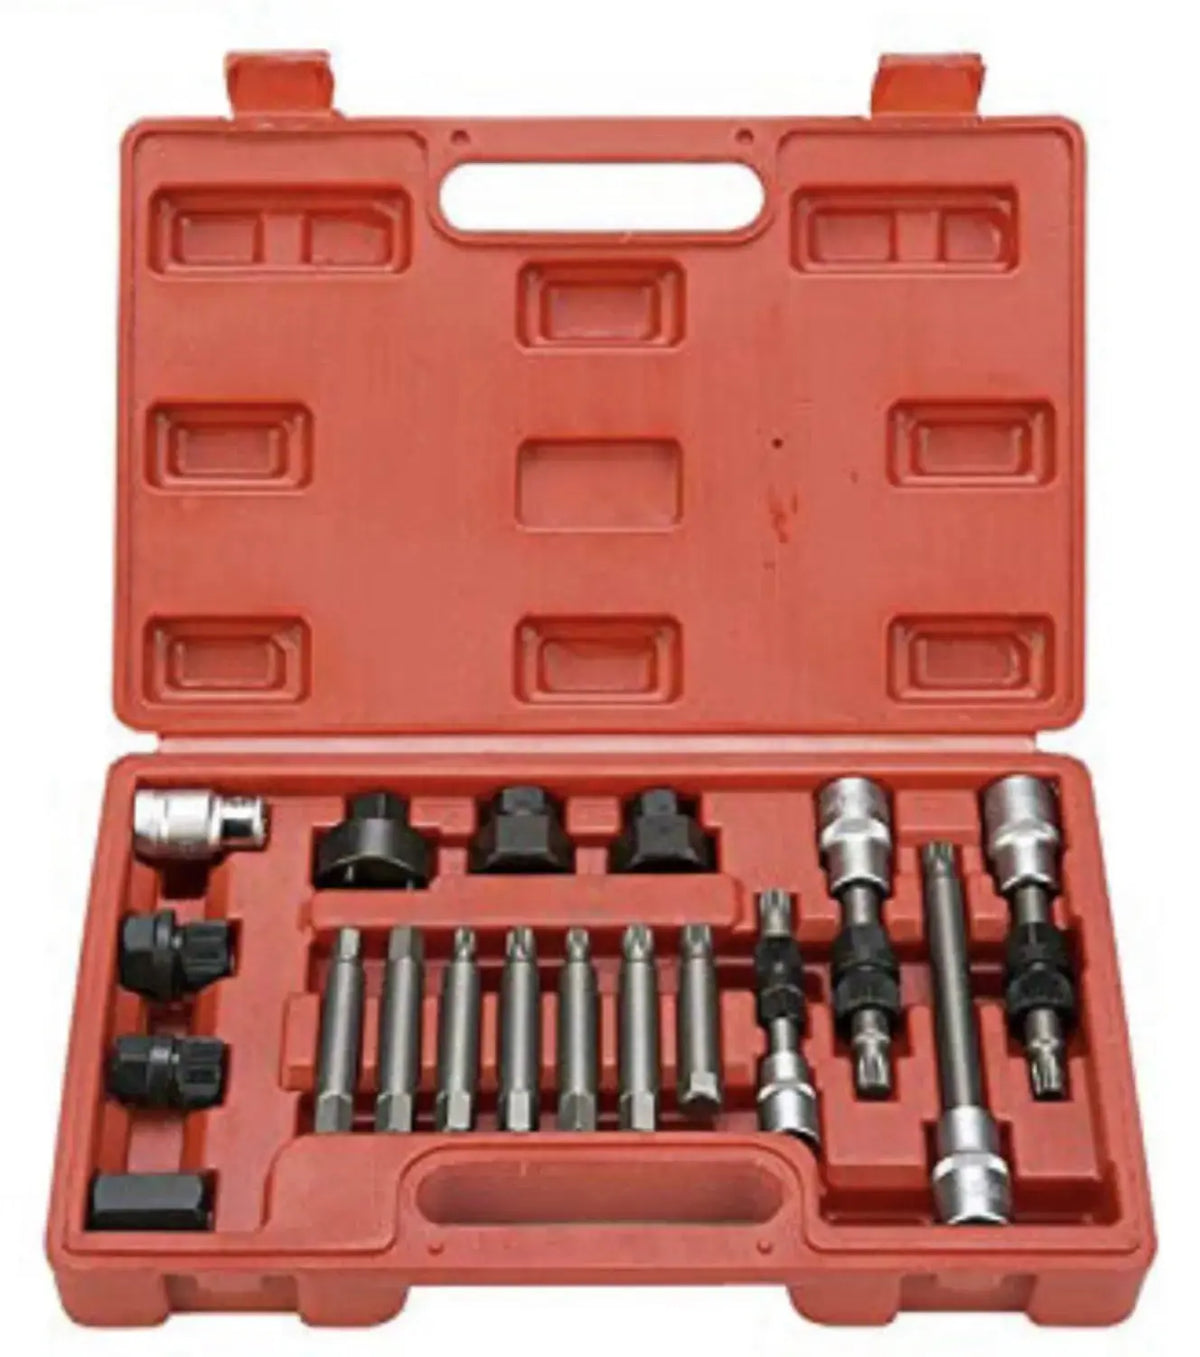 Alternator Free Wheel Pulley Removal Tool Set 18 Pieces - FairTools